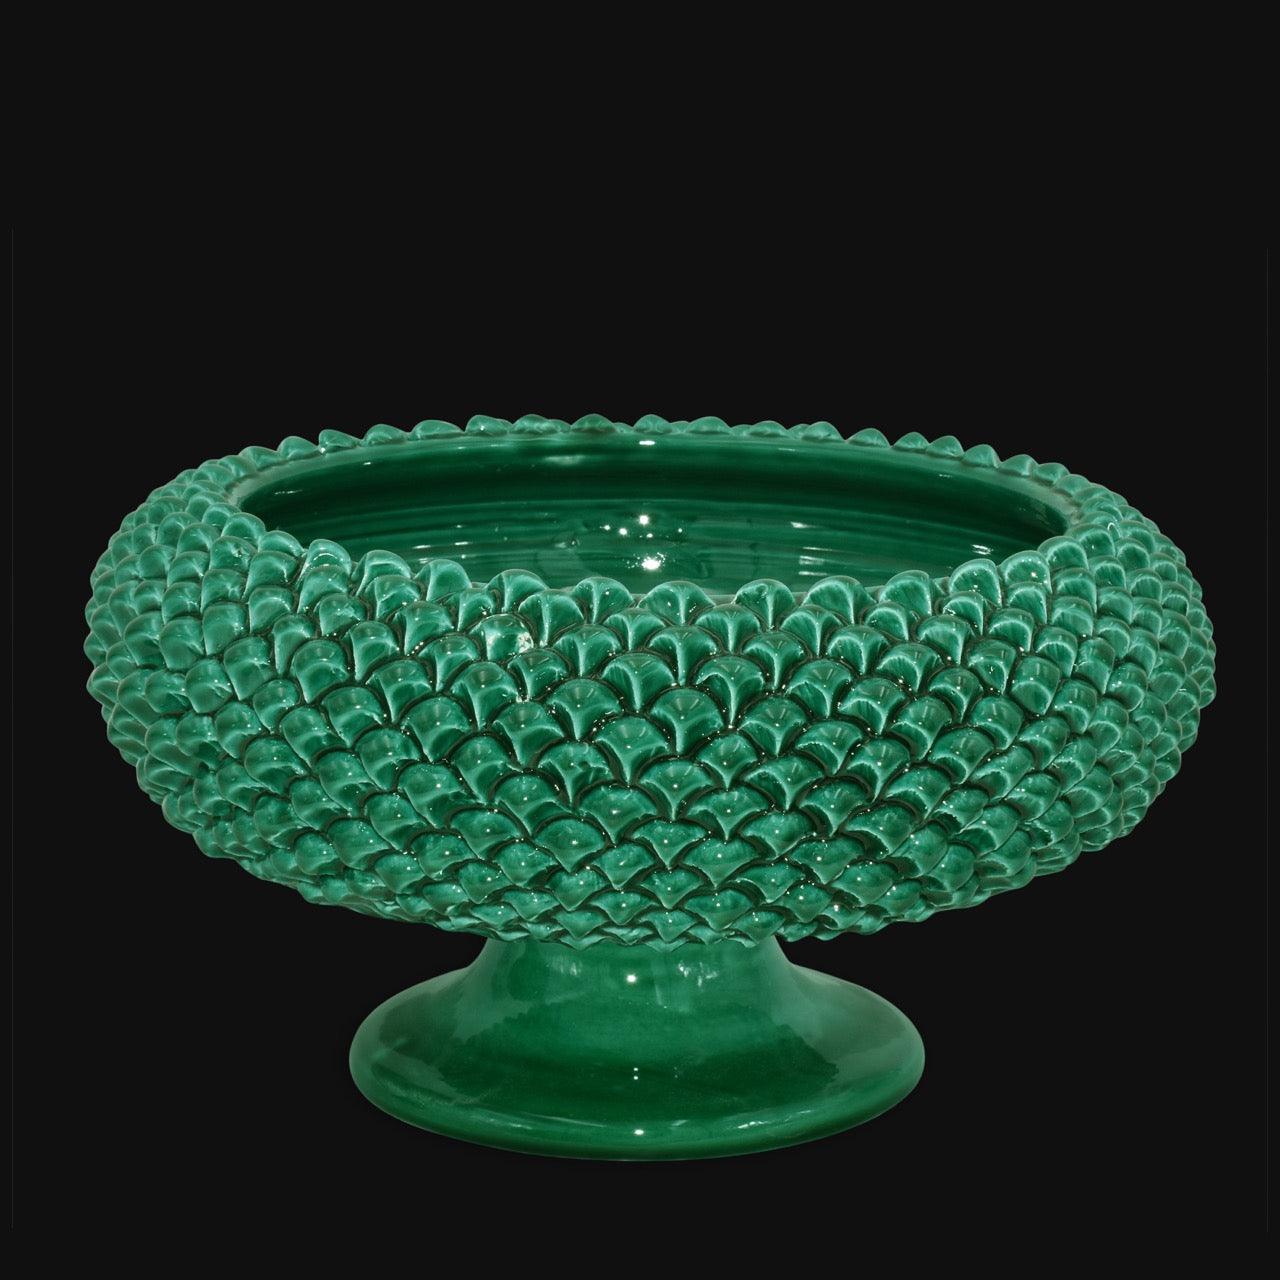 Alzata a Pigna diam. 25/33 cm Verde Smeraldo in ceramica di Caltagirone - Ceramiche di Caltagirone Sofia